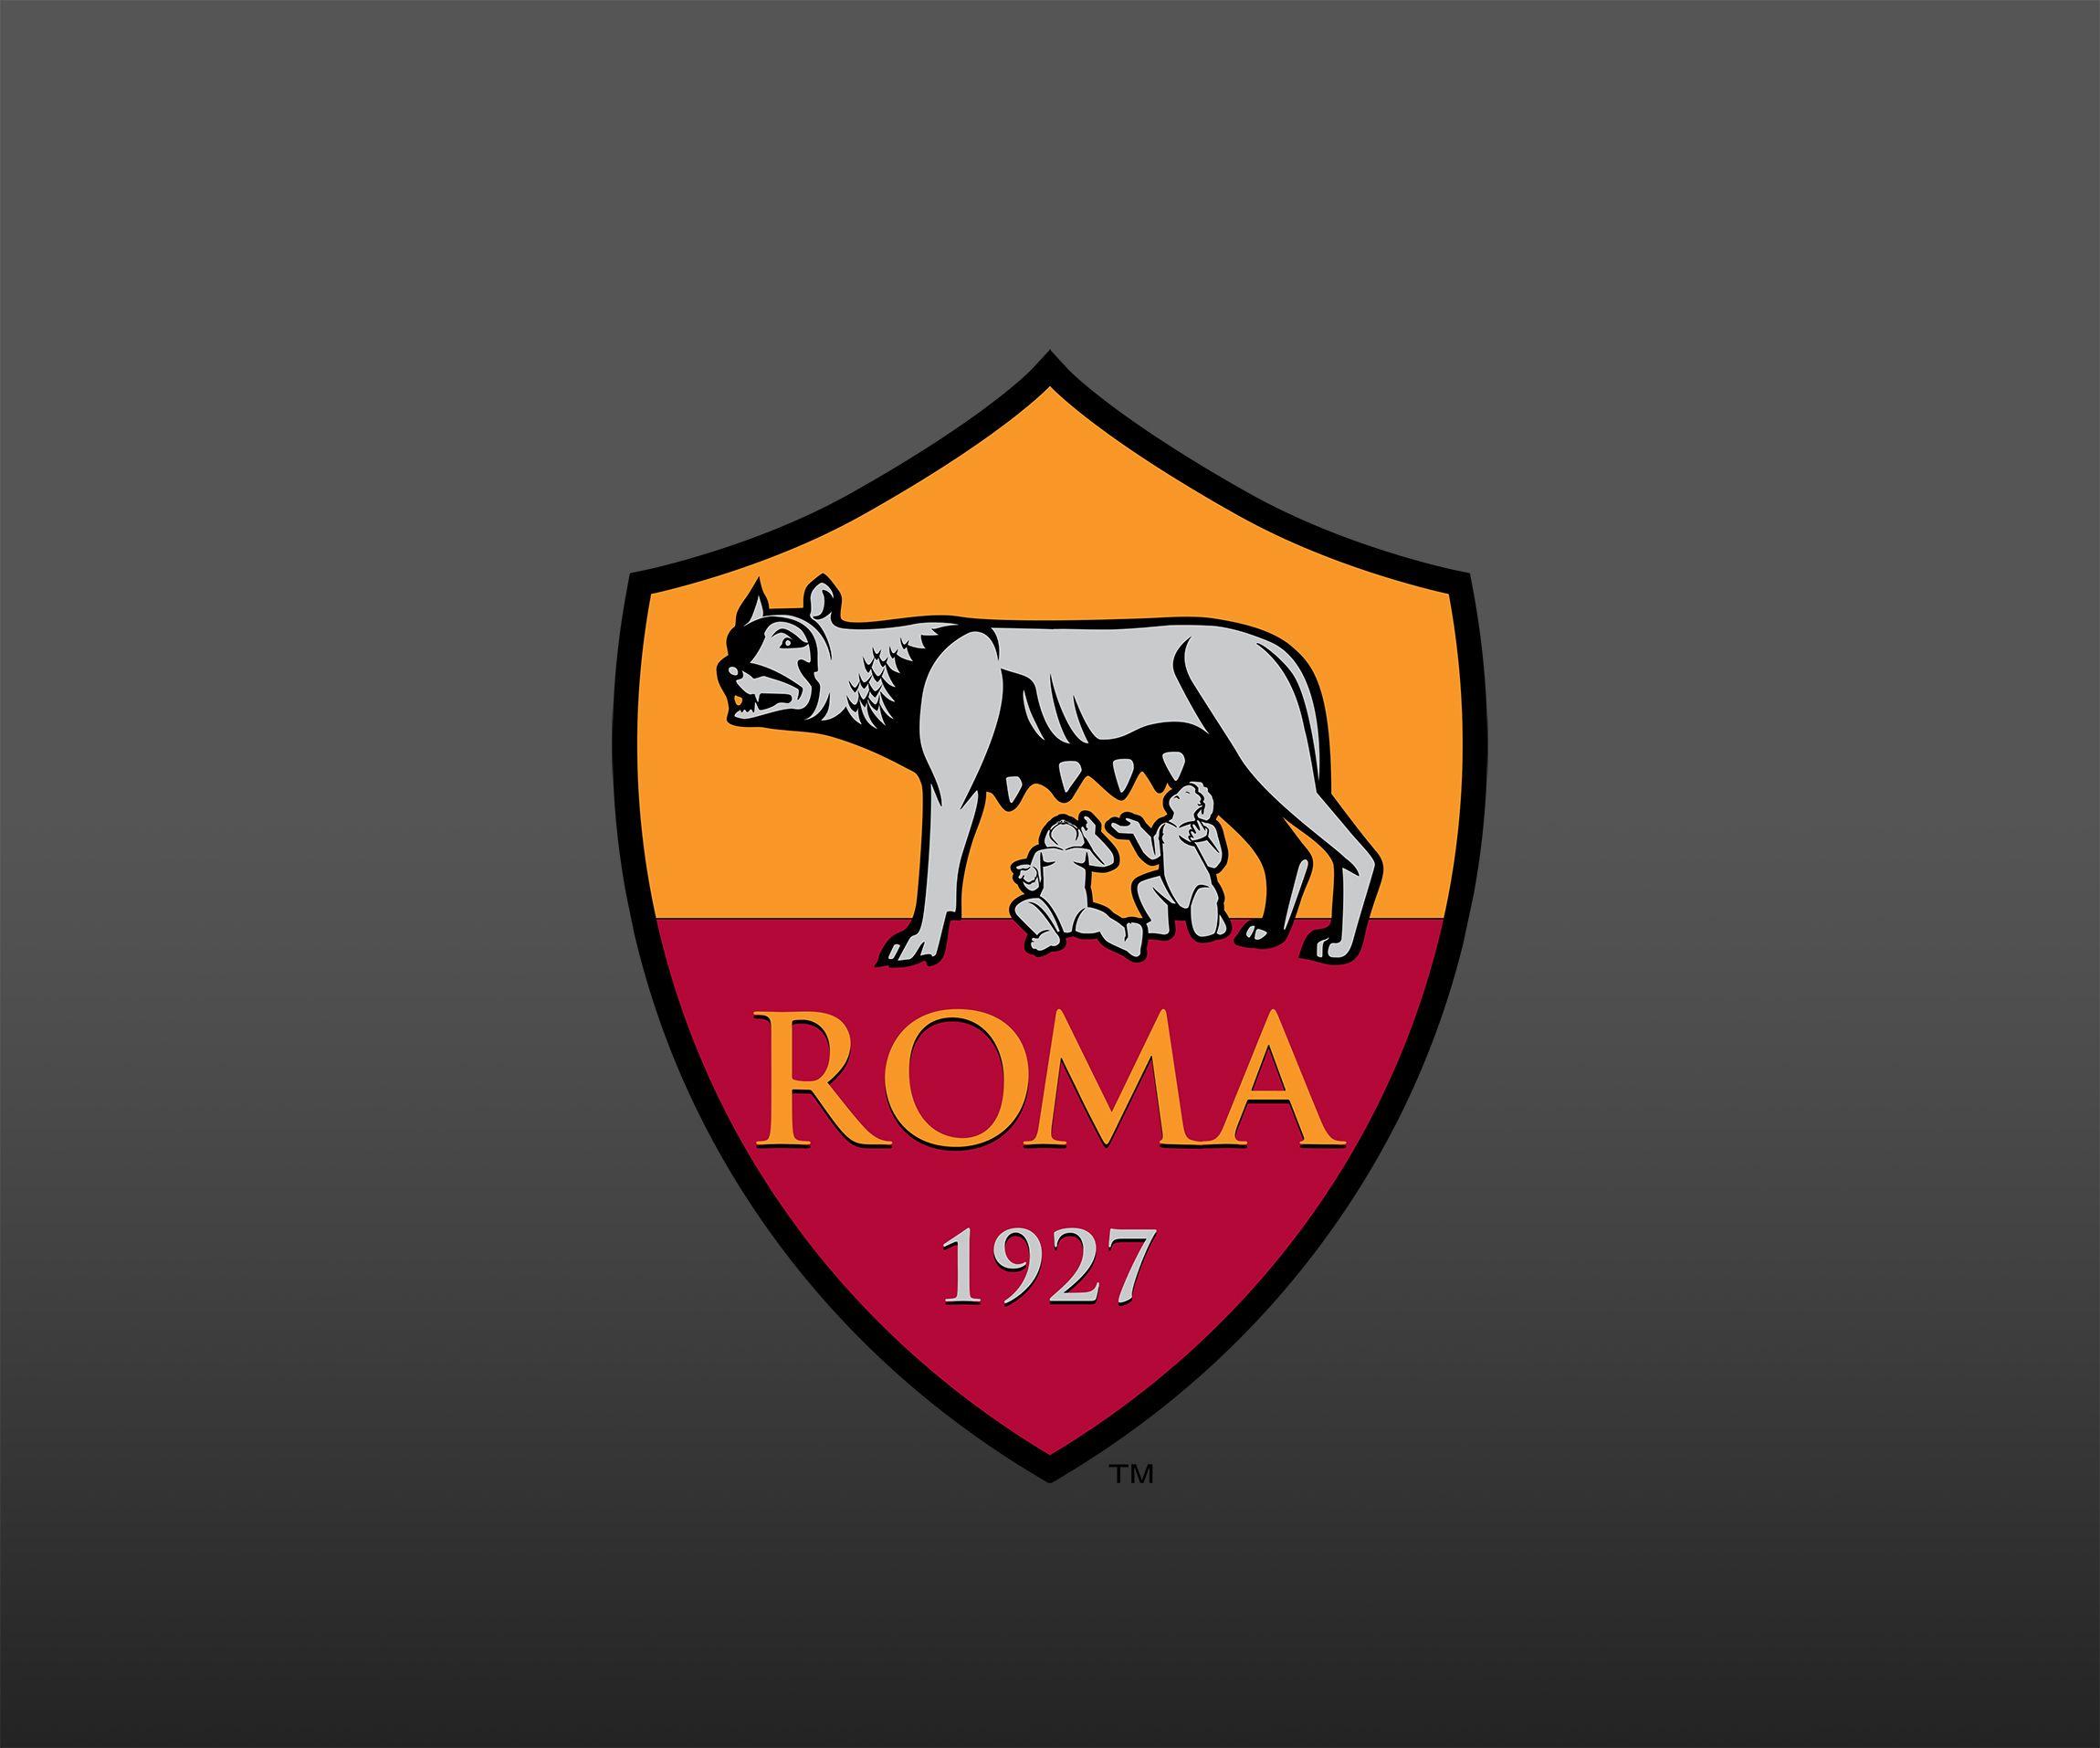 Roma Logo - AS Roma get a new logo